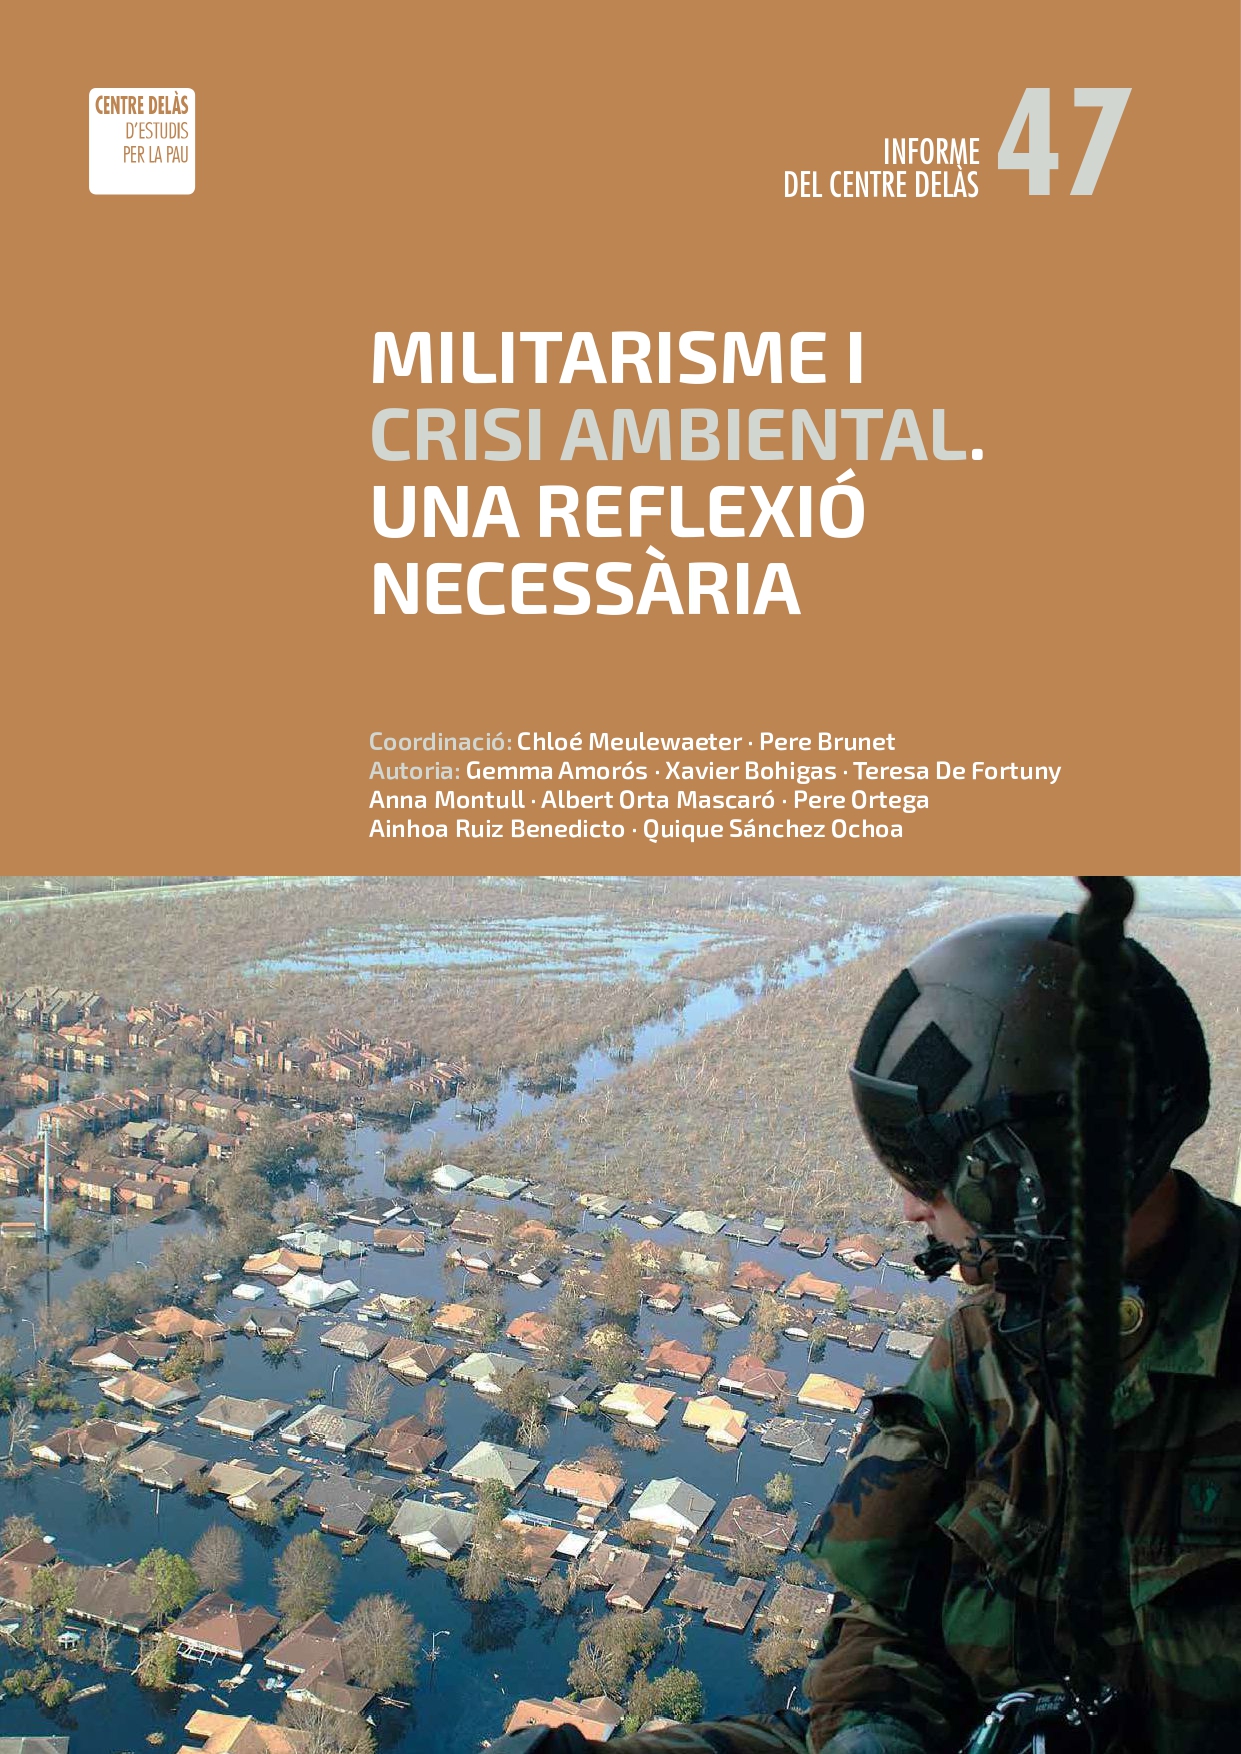 Informe 47: “Militarisme i crisi mediambiental. Una reflexió necessària”